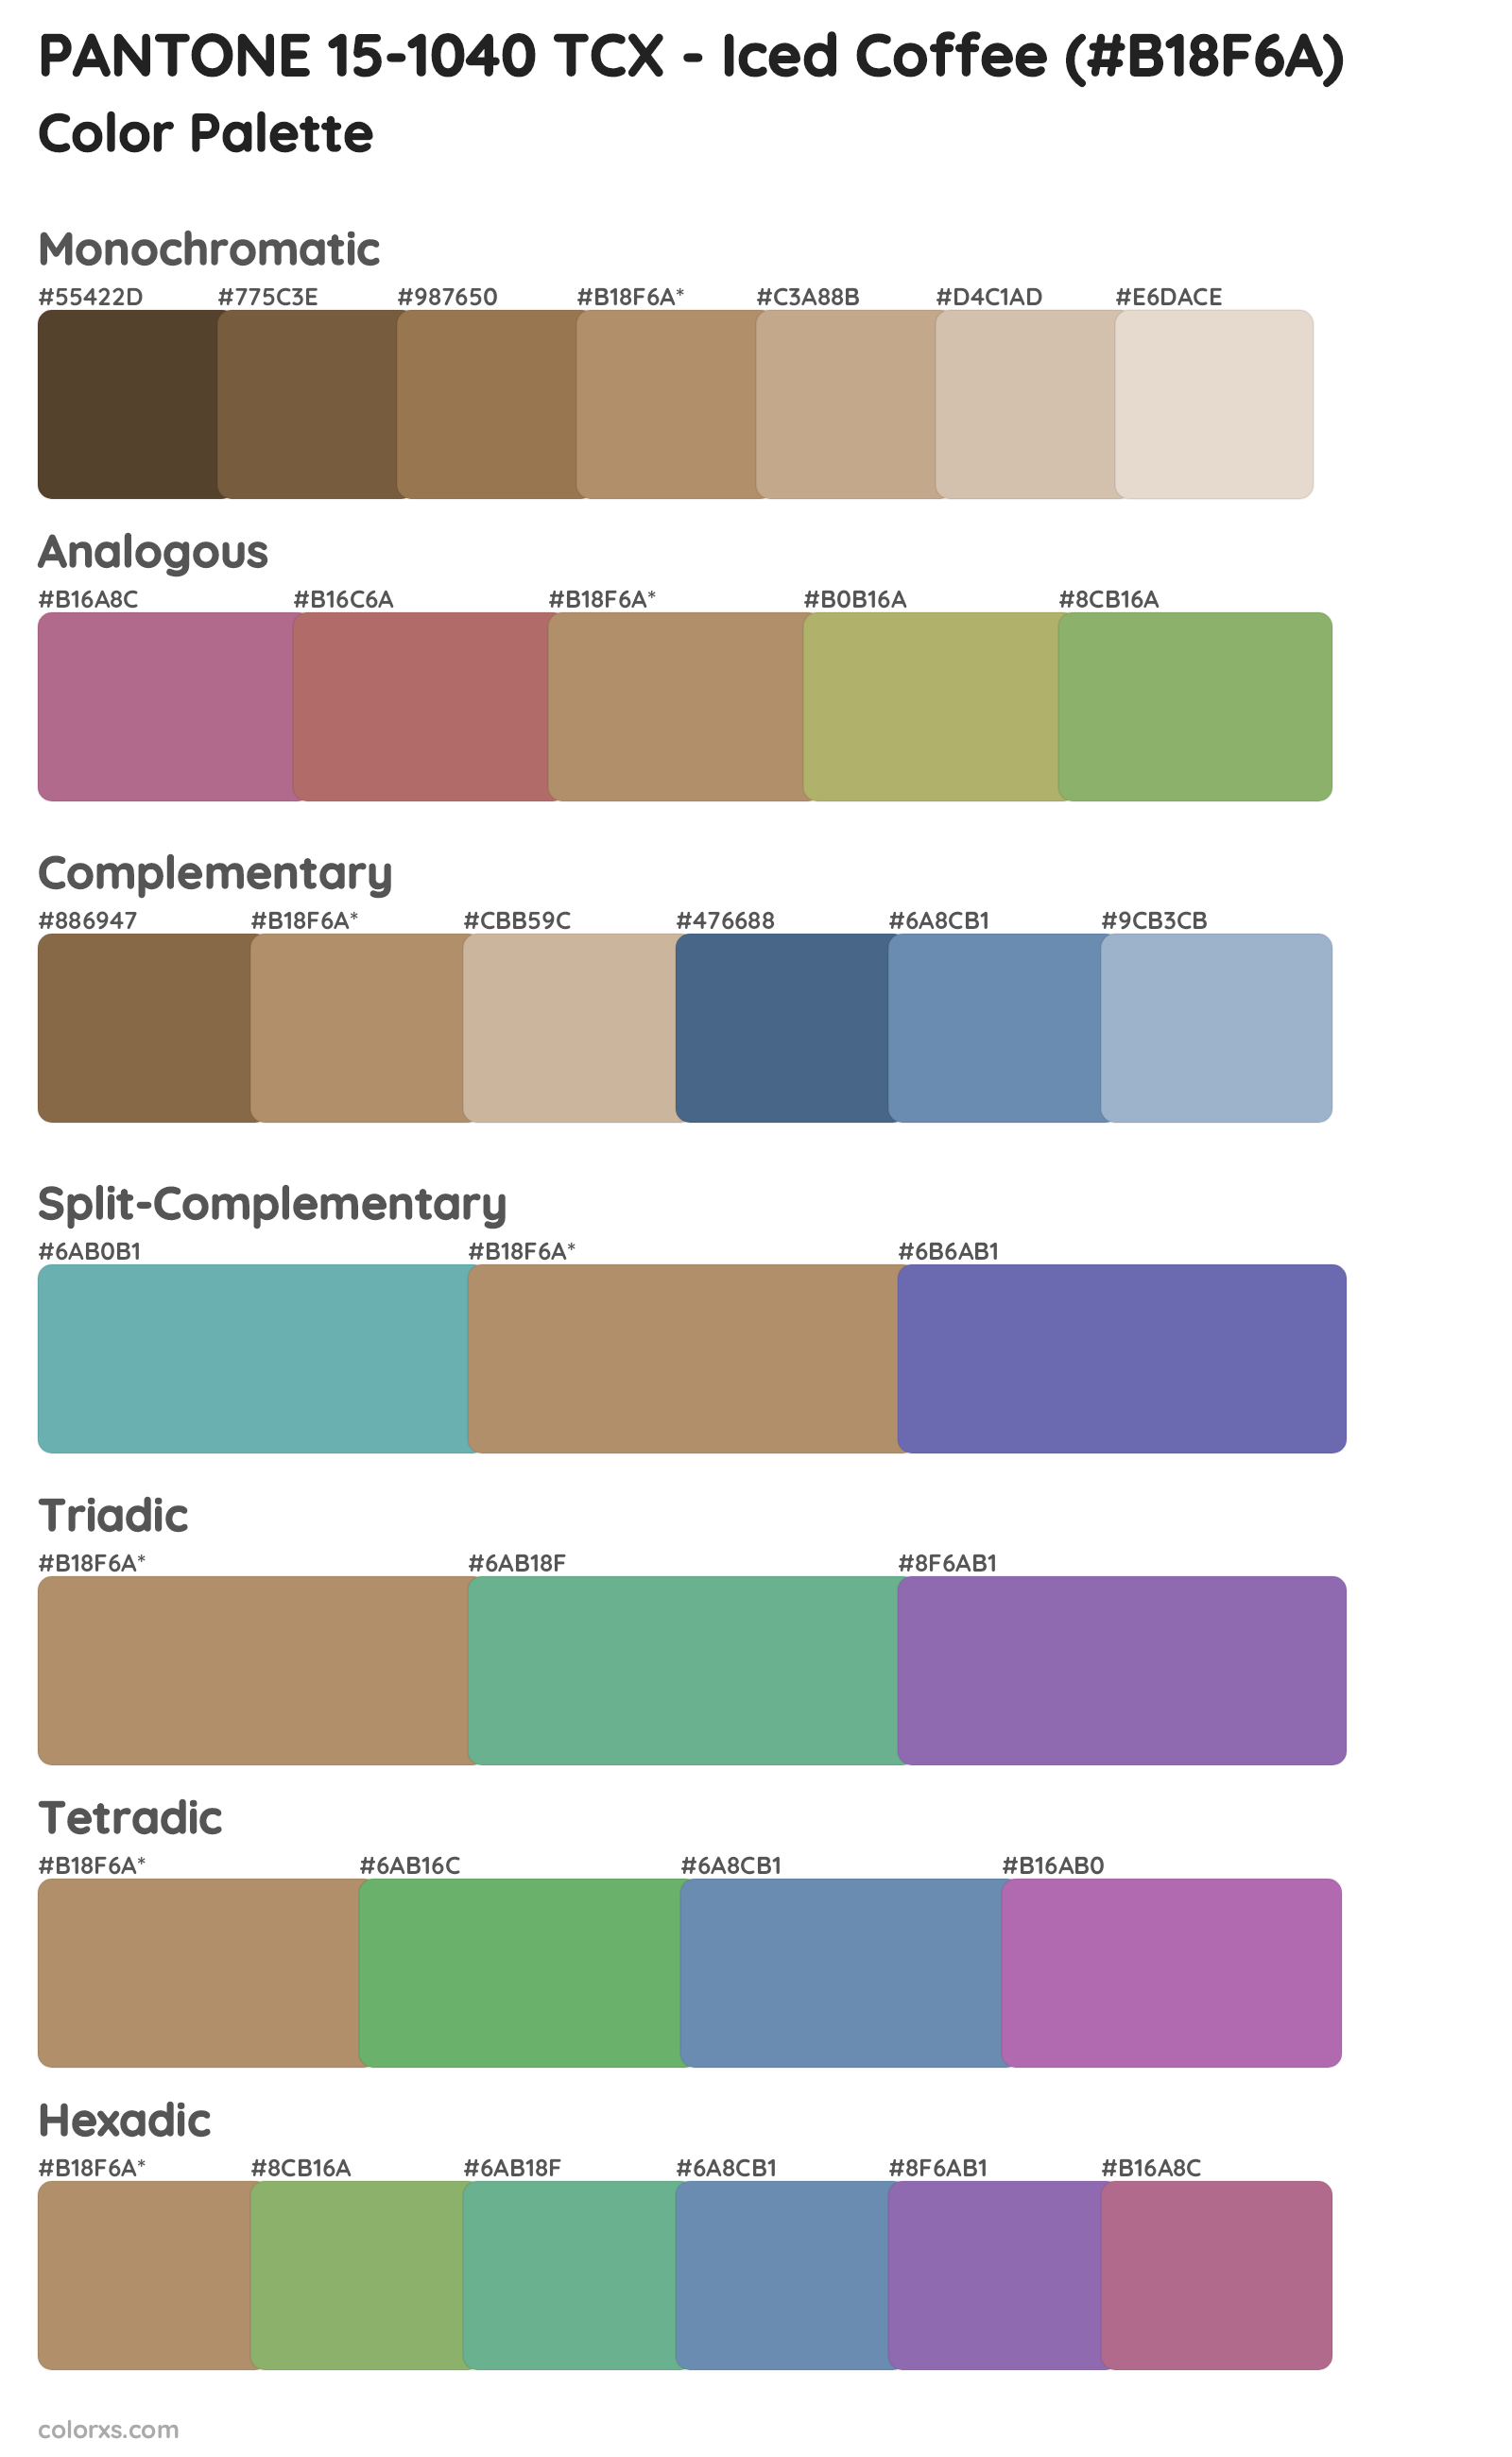 PANTONE 15-1040 TCX - Iced Coffee Color Scheme Palettes